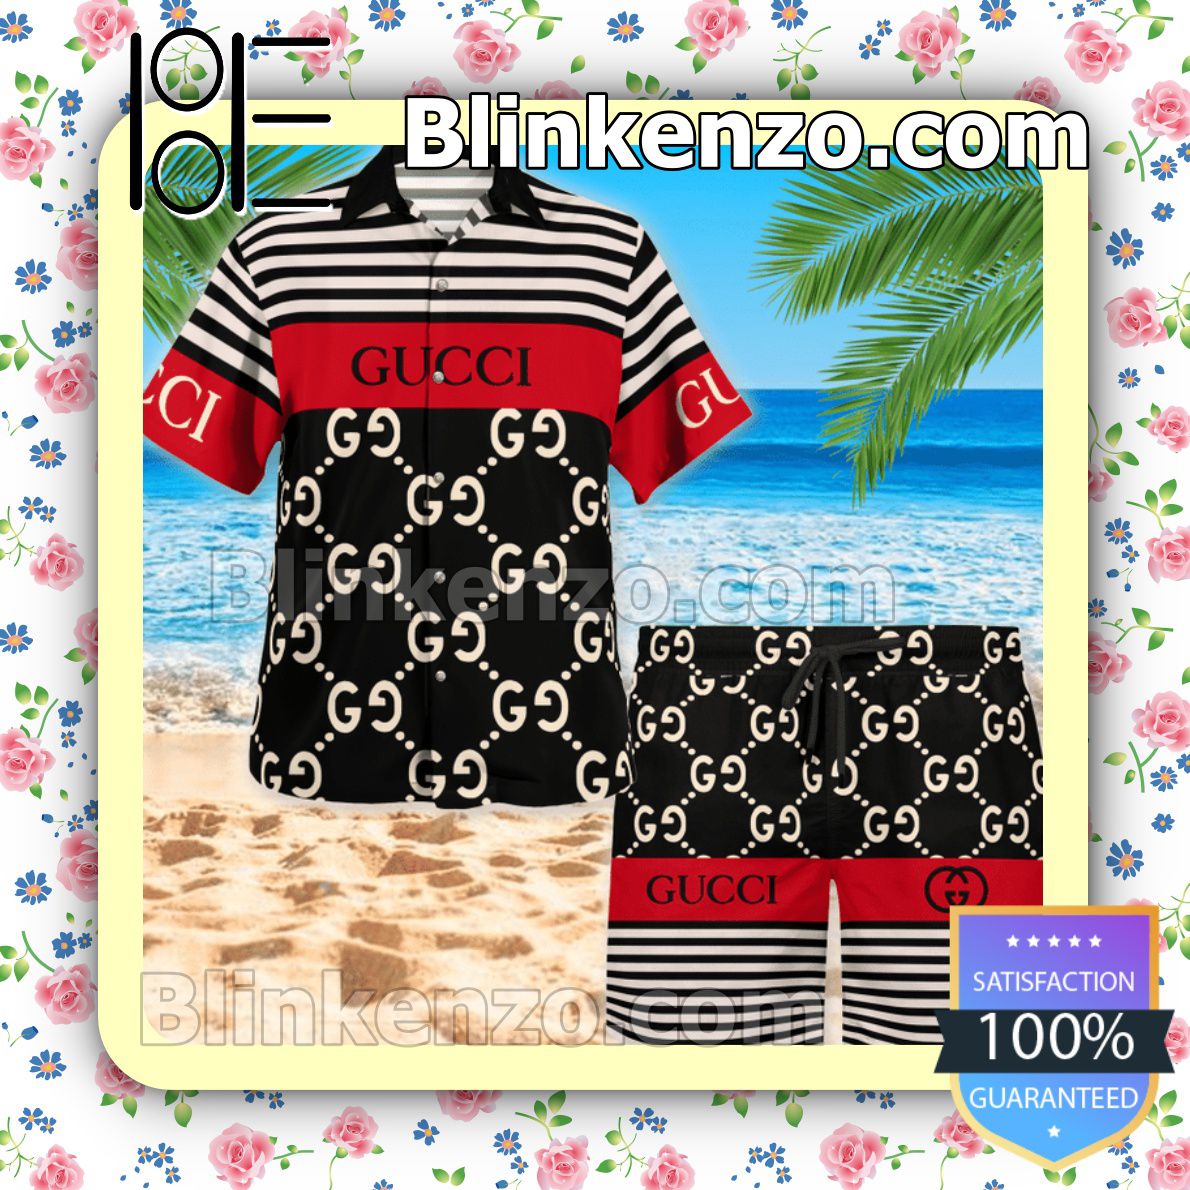 Gucci Horizontal Stripes Black Mix Red Luxury Beach Shirts, Swim Trunks